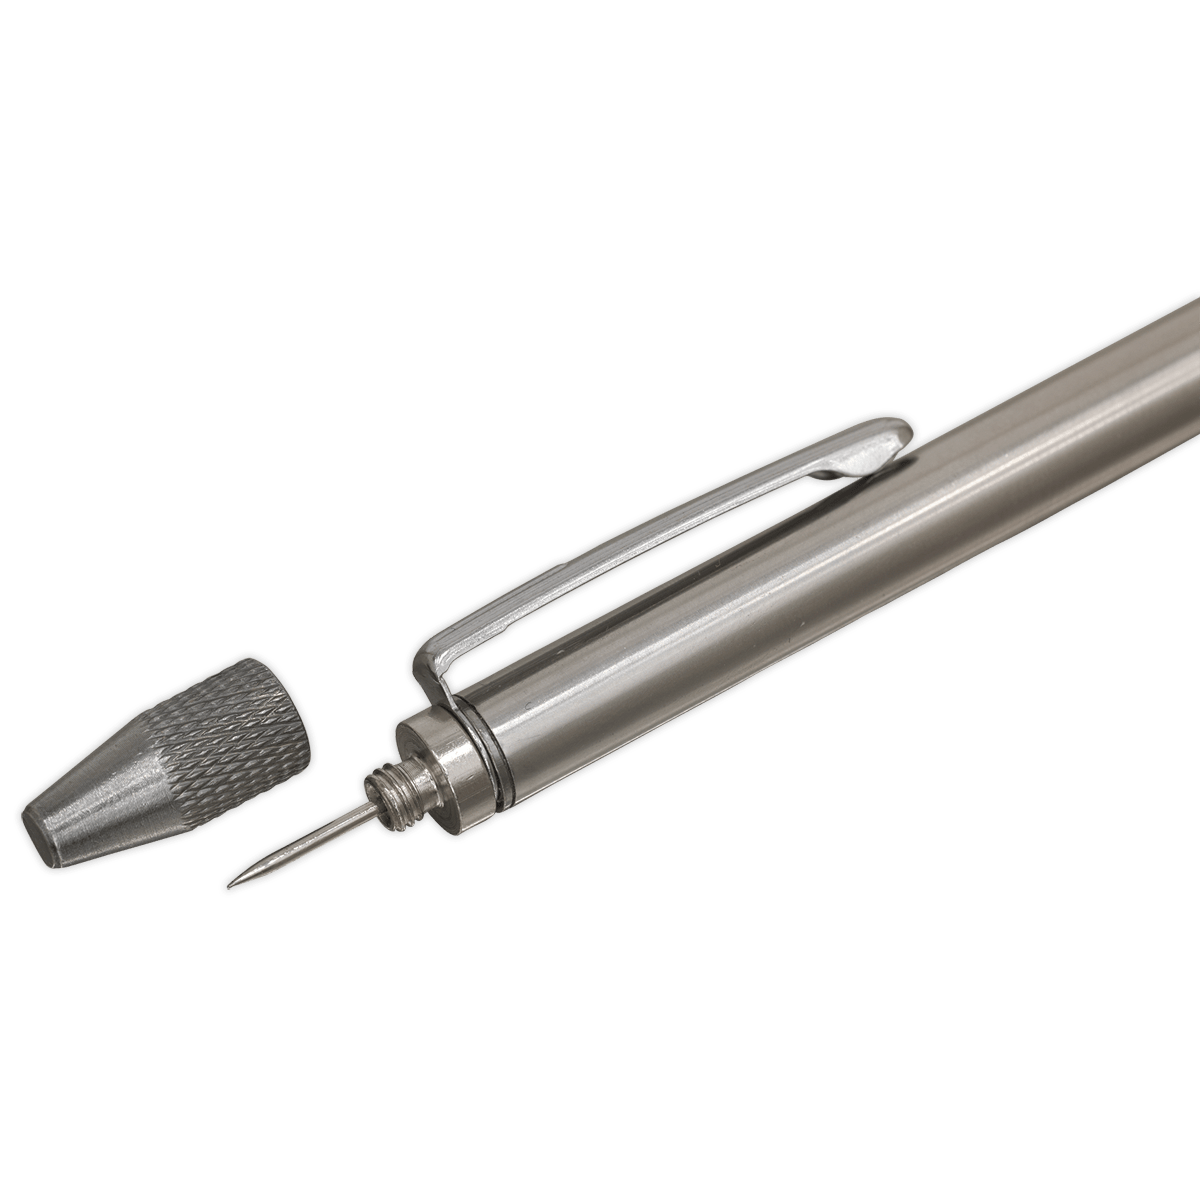 Sealey Magnetic Pick-Up Tool 1.6kg Capacity AK6516